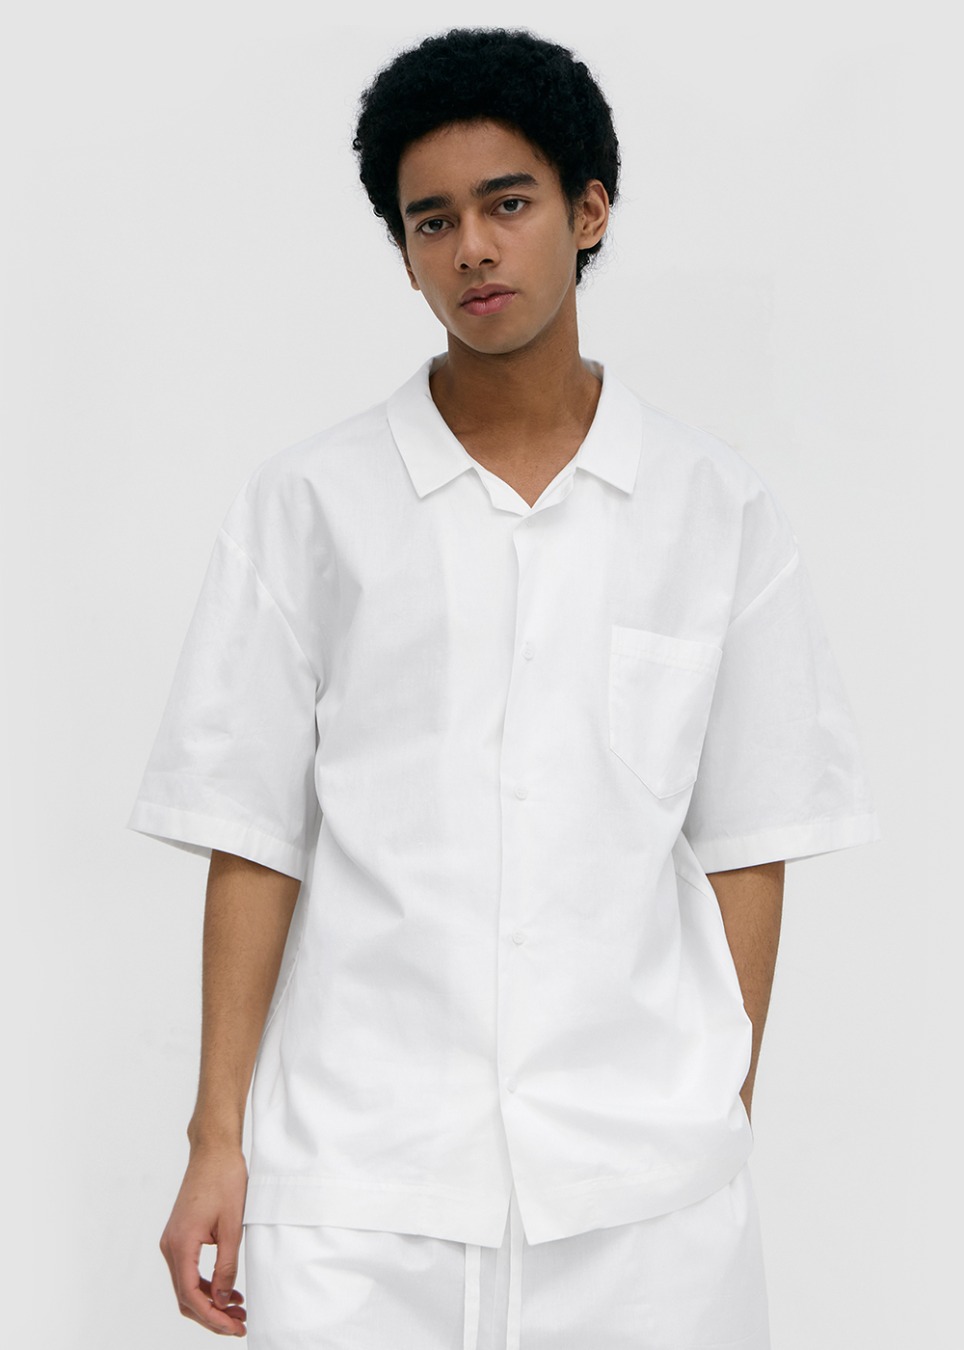 Stay Pajamas Short Sleeve Shirt - True White